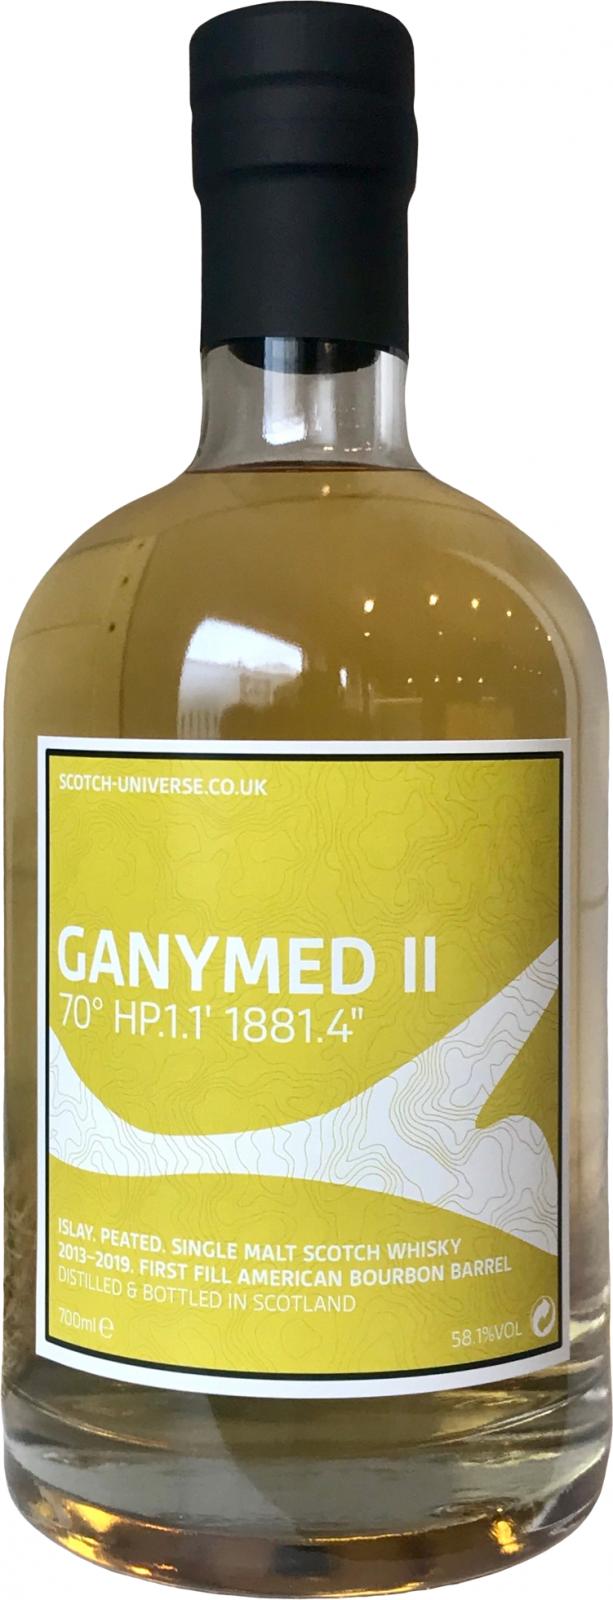 Scotch Universe Ganymed II - 70° HP.1.1' 1881.4"